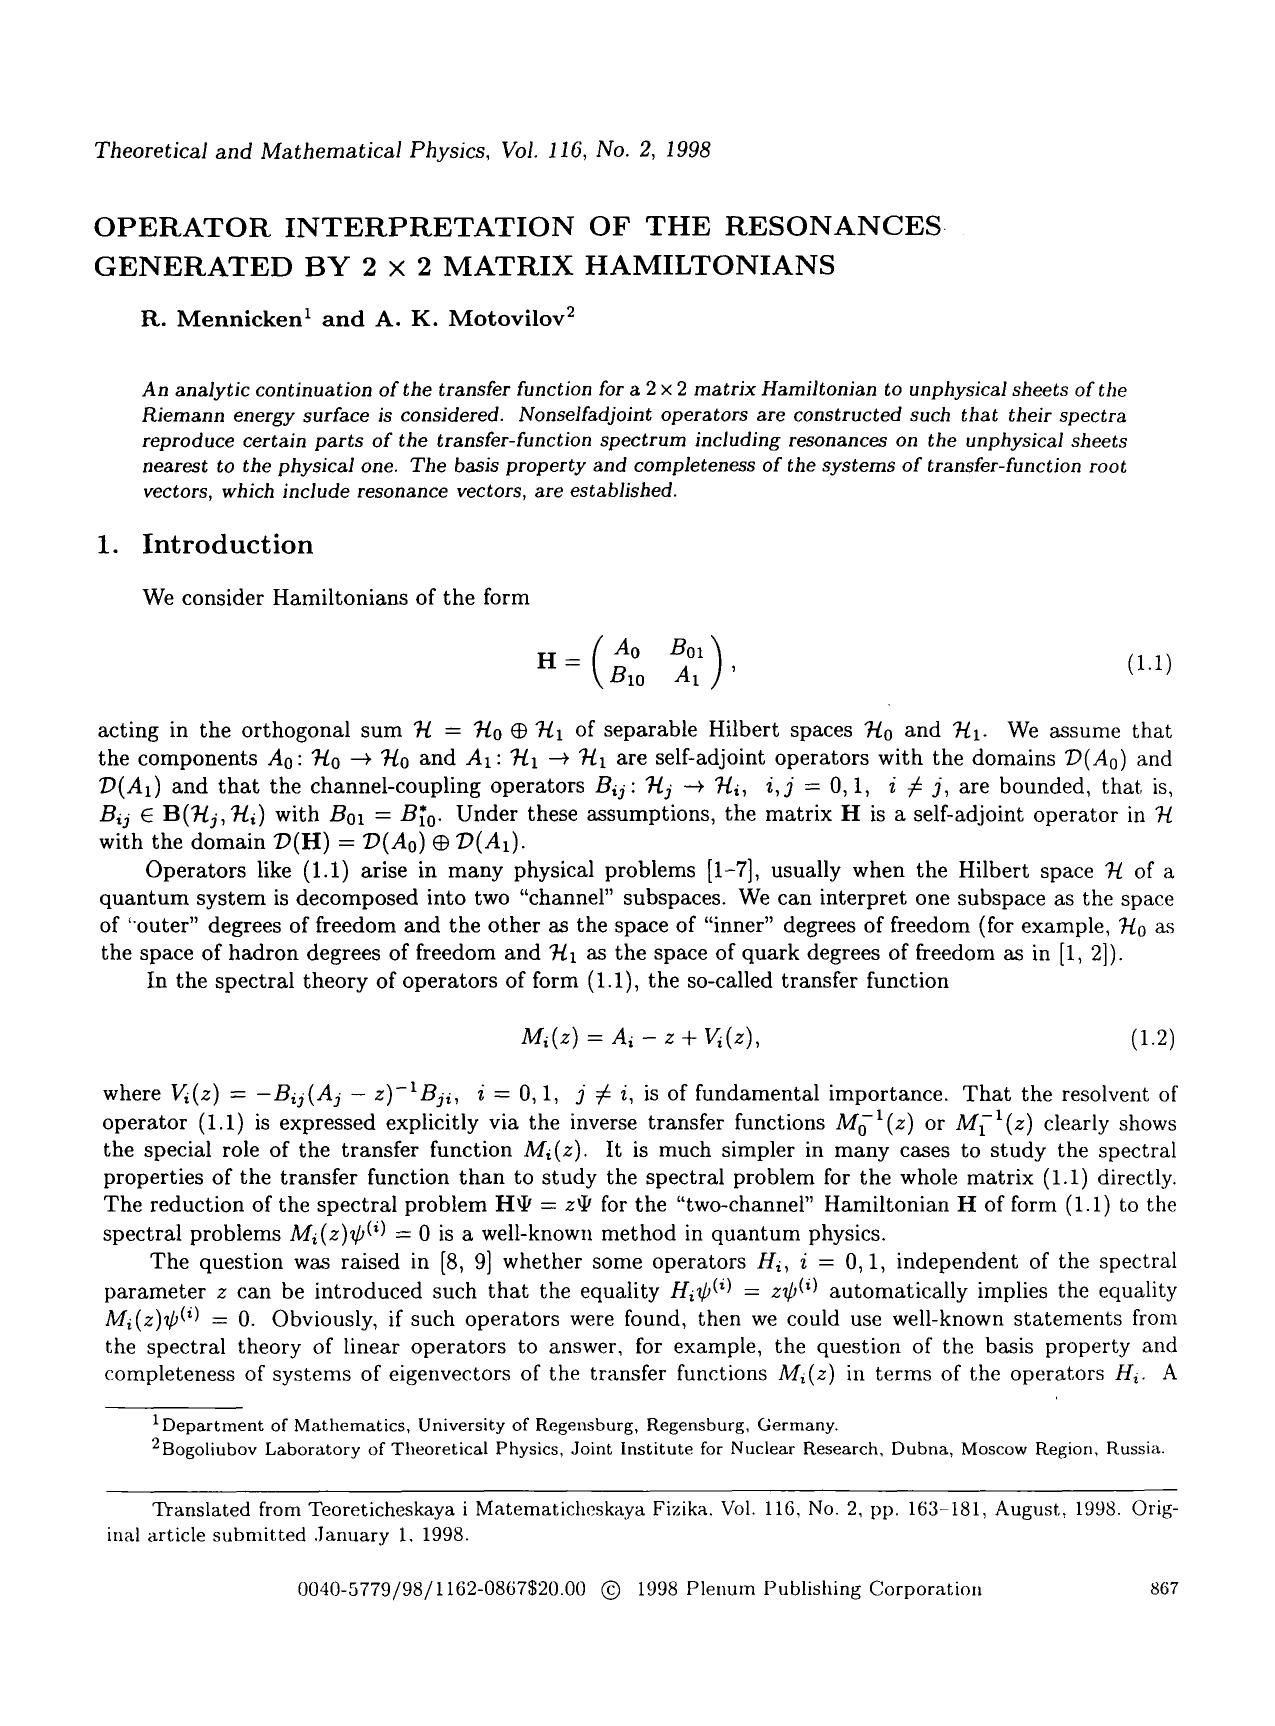 Operator interpretation of the resonances generated by 2&#x00D7;2 matrix Hamiltonians by Unknown